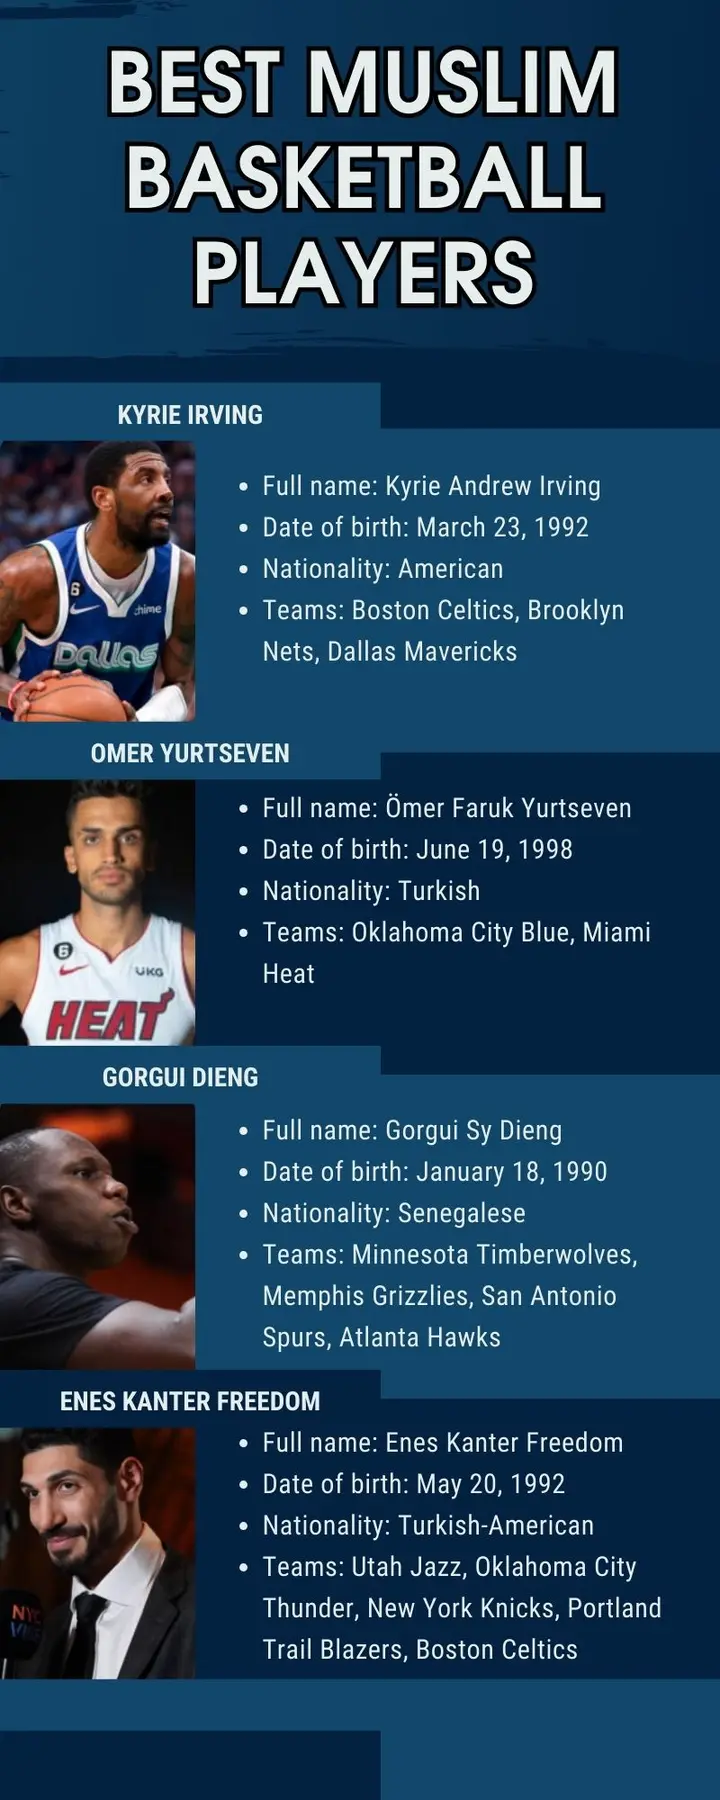 Best Muslim basketball players